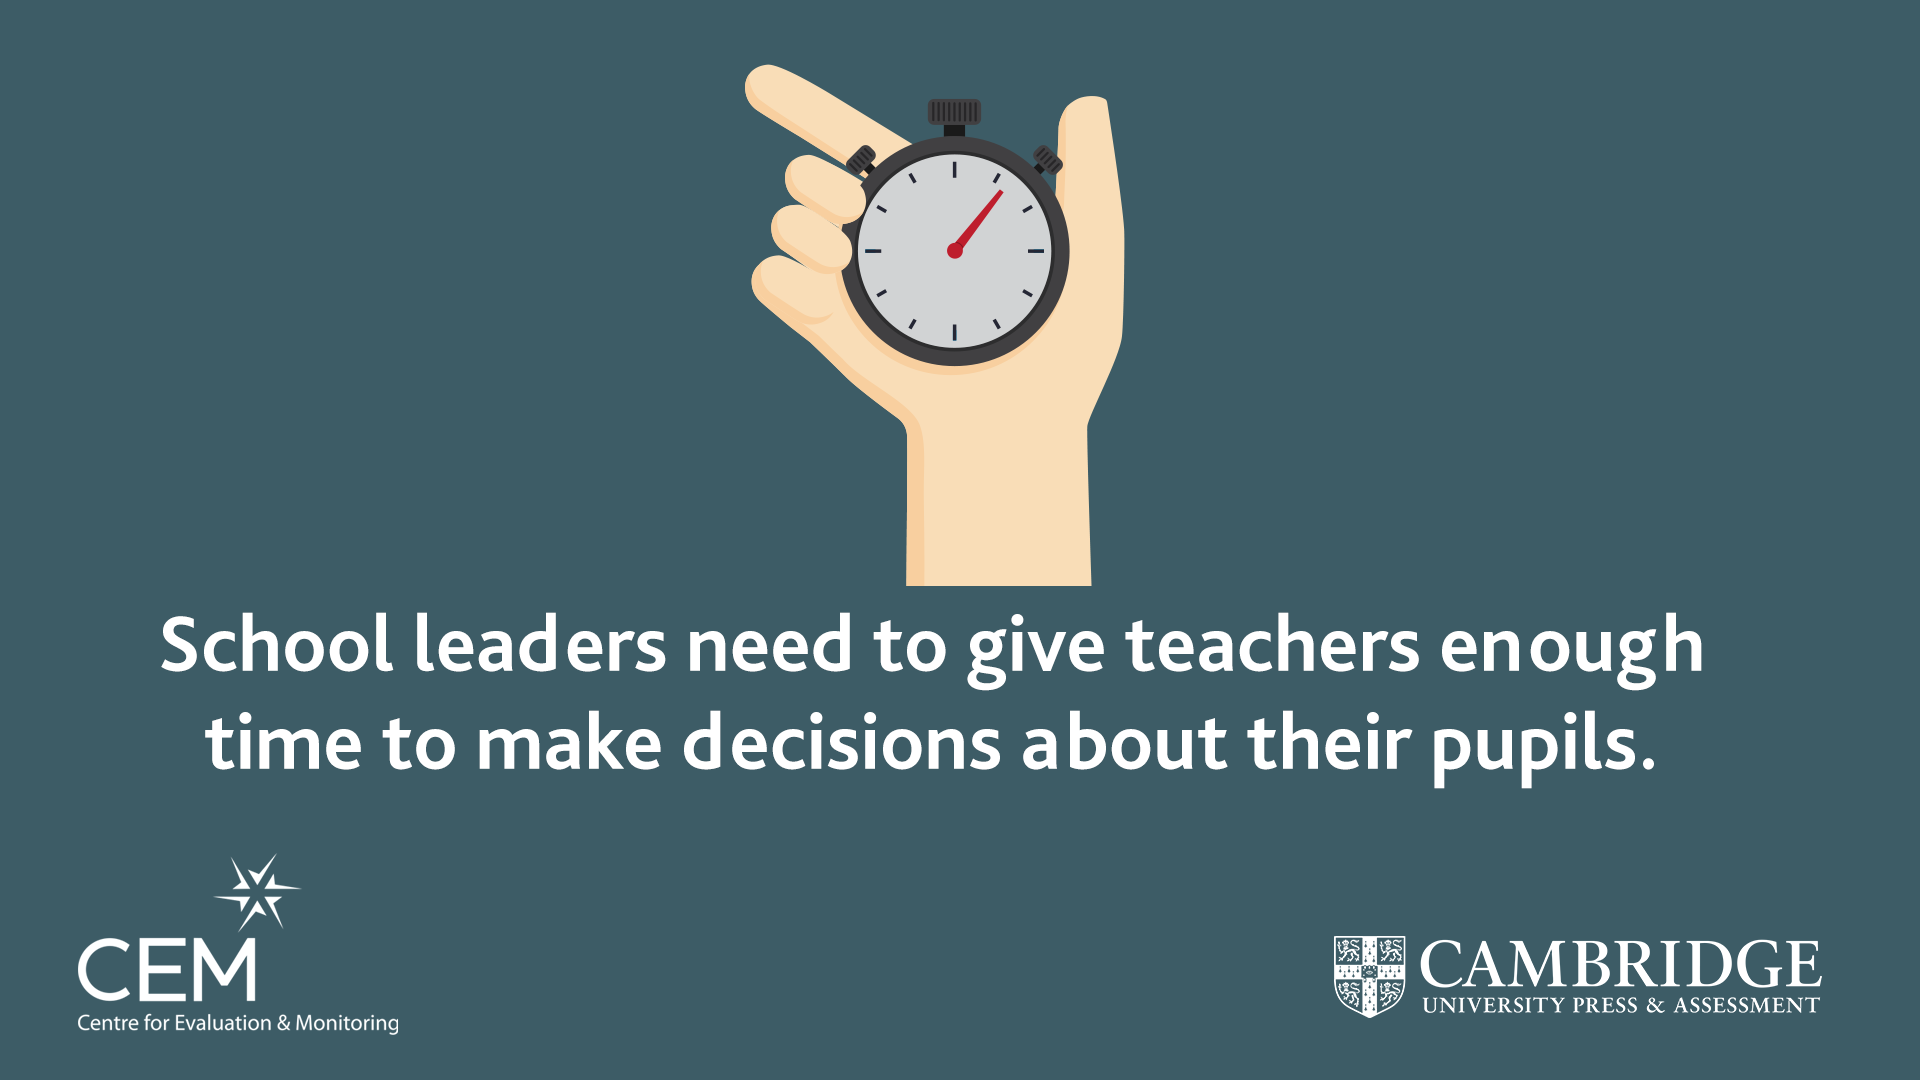 Give teachers enough time